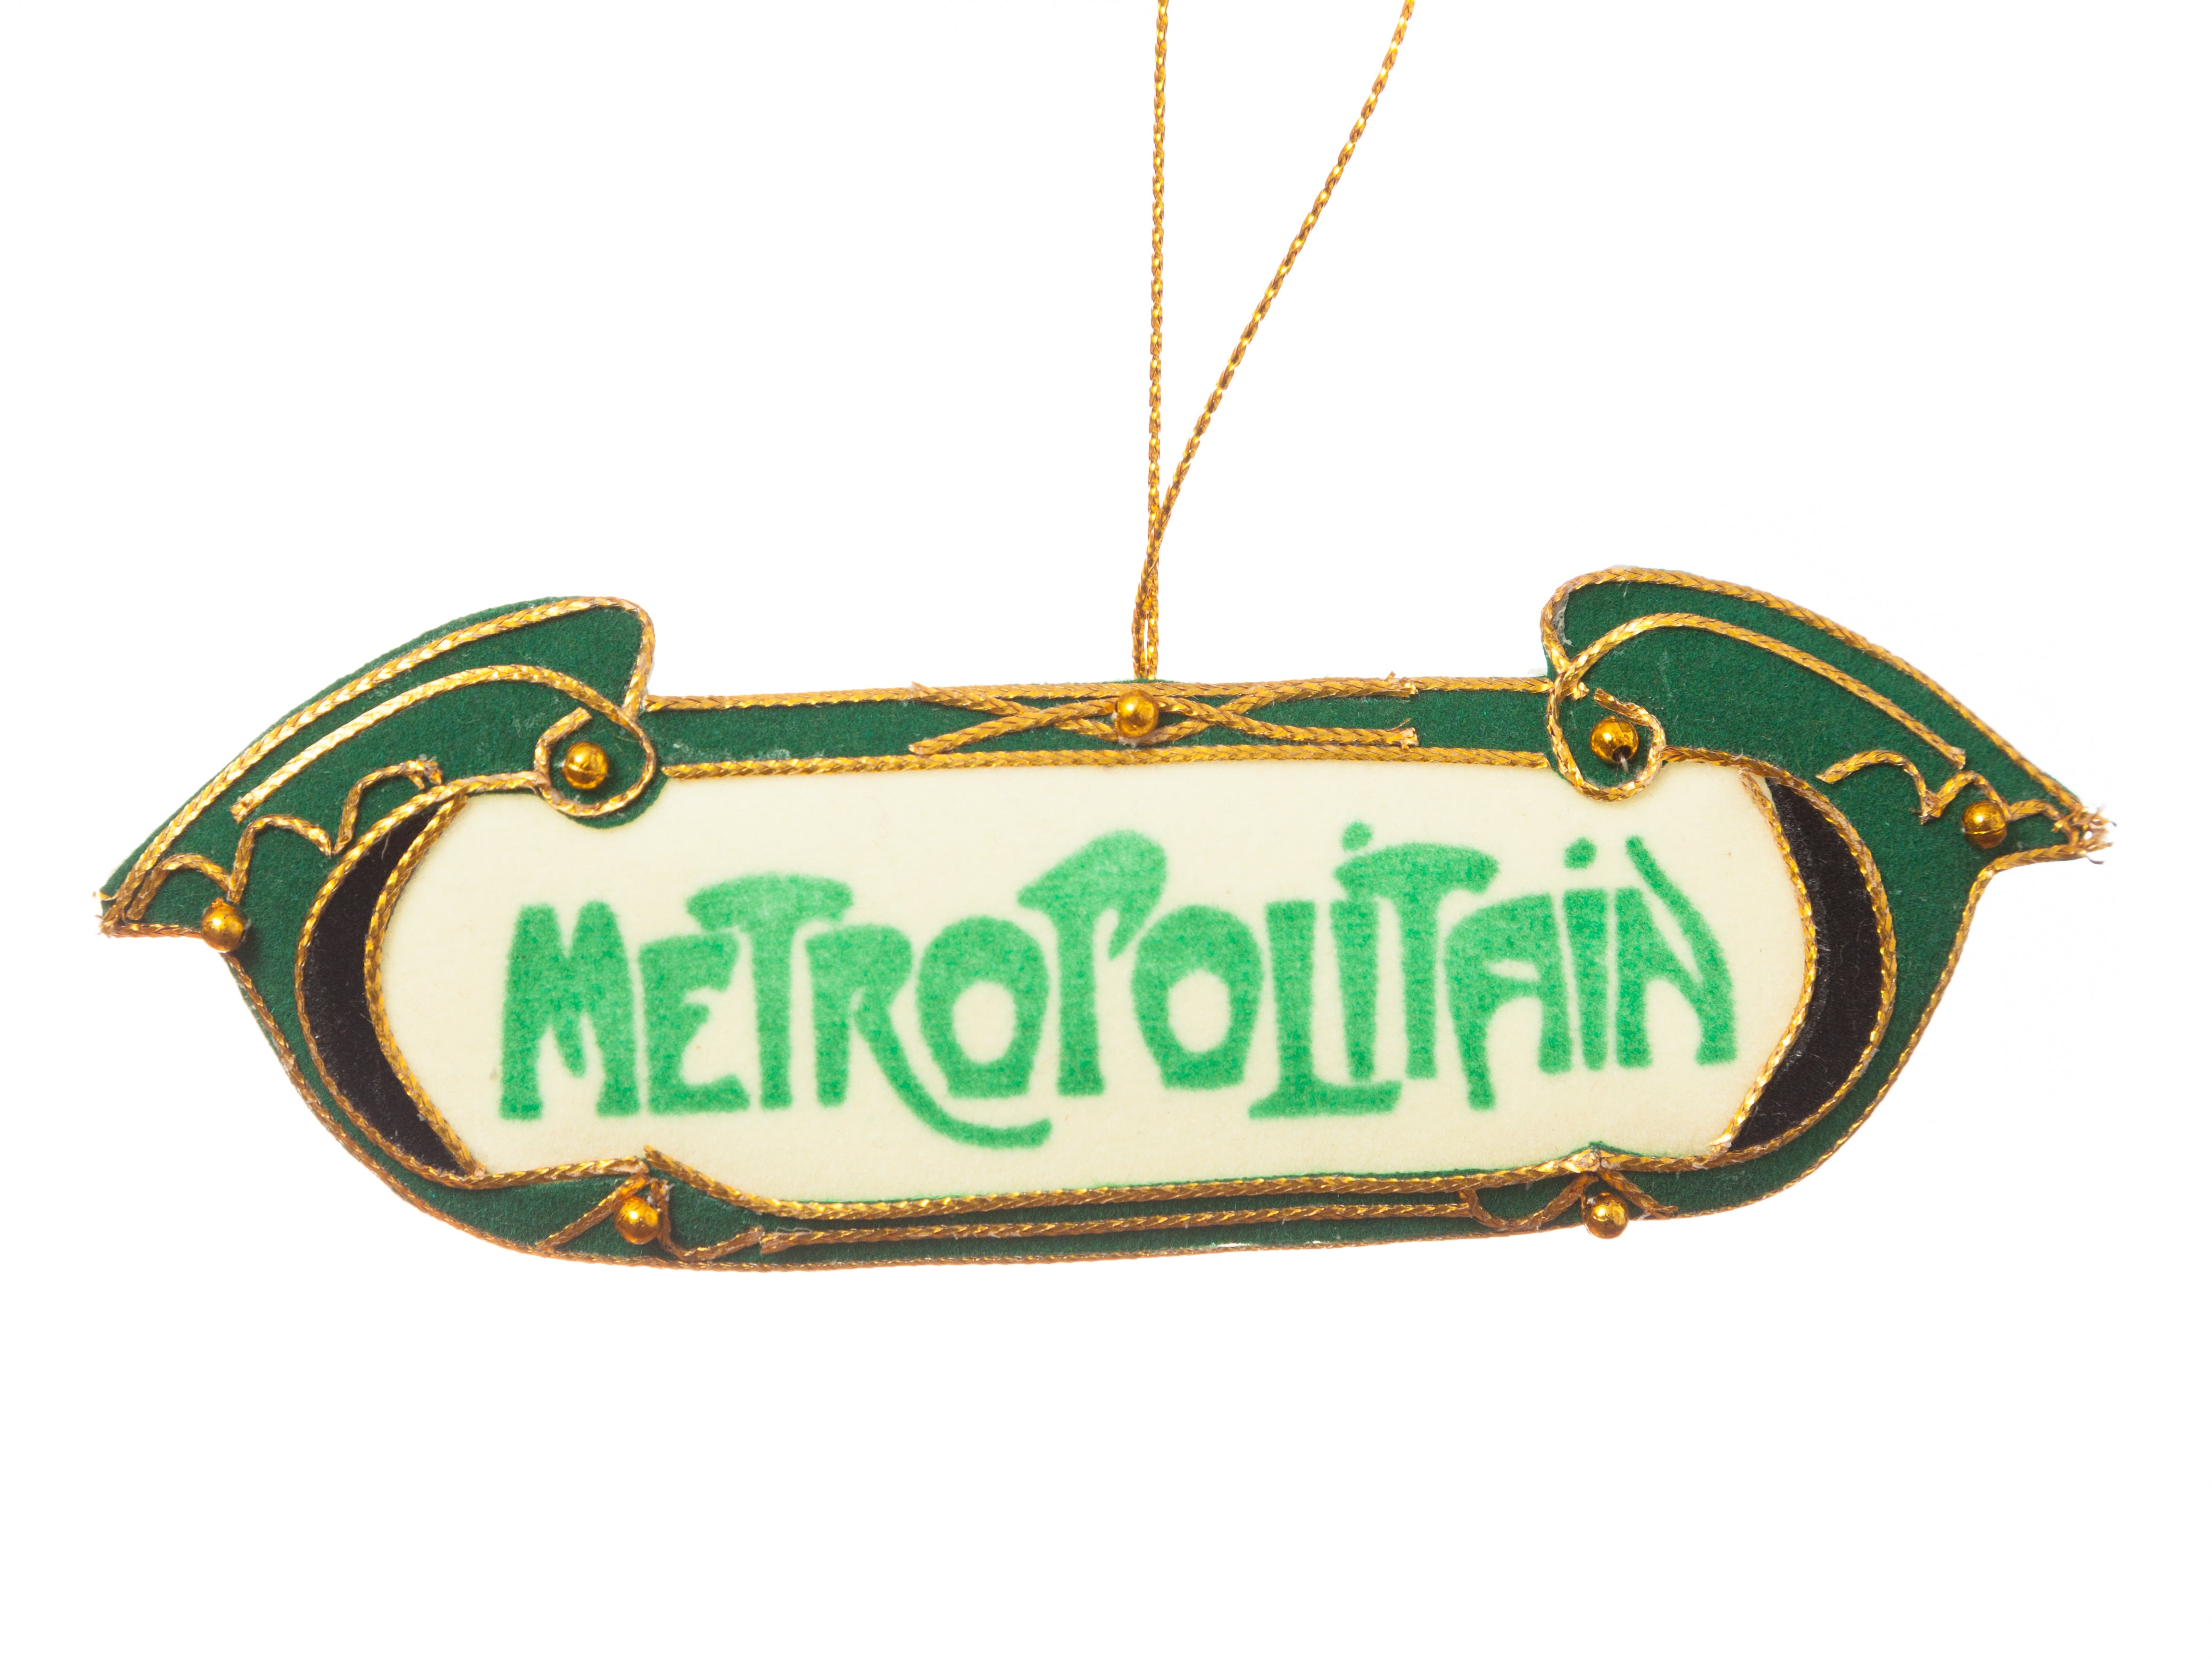 Guimard Metro Sign Ornament